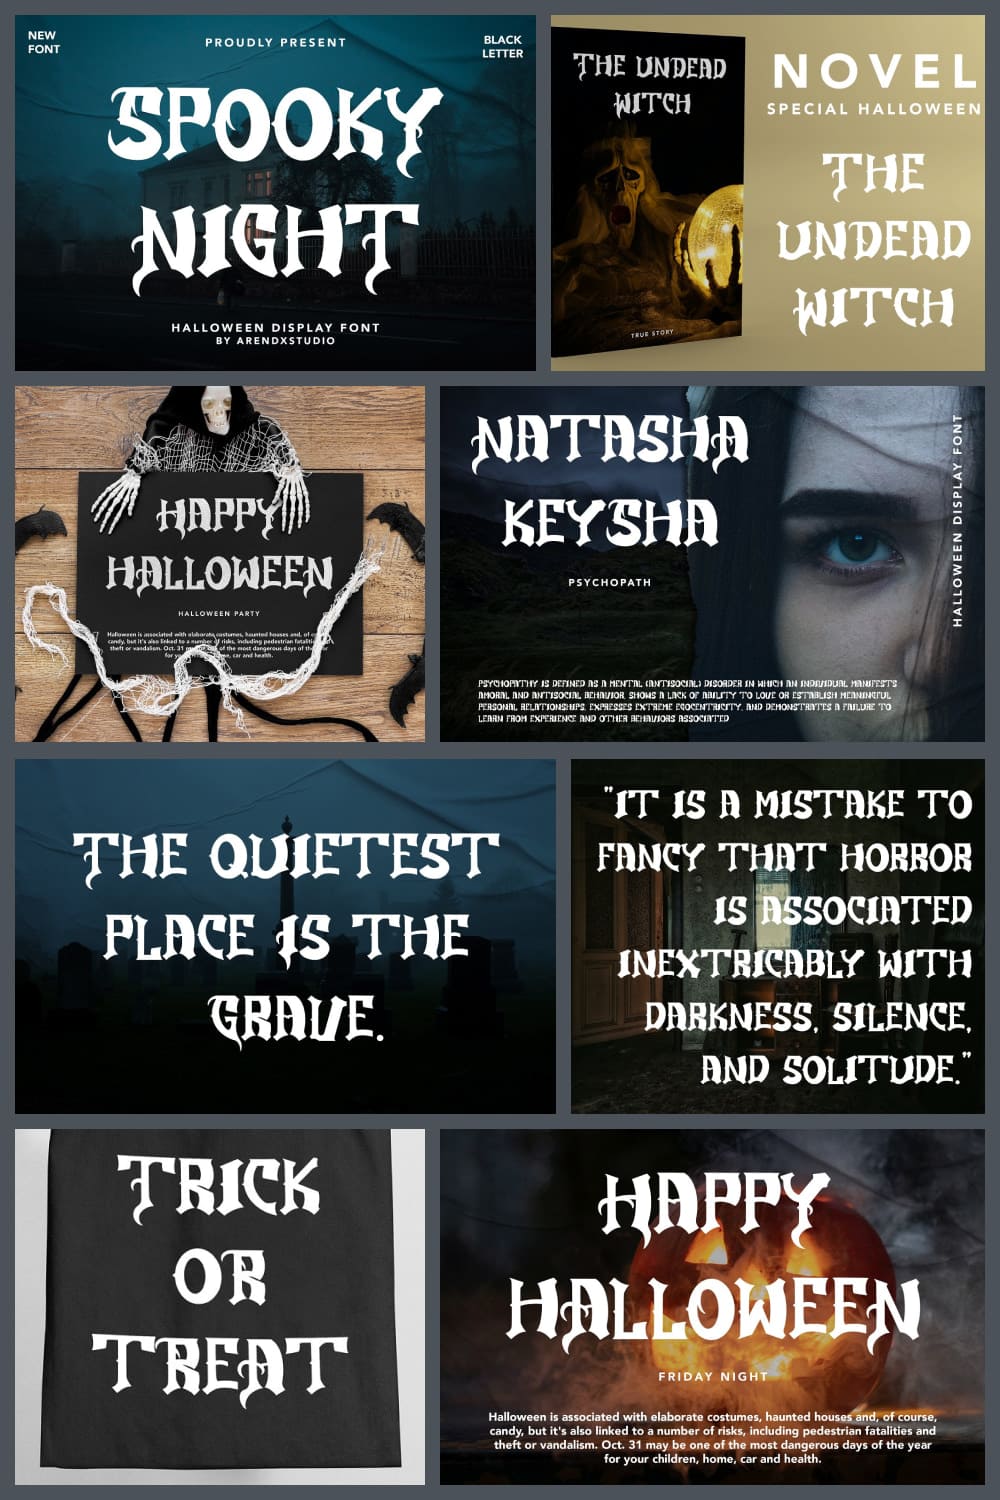 Spooky Night - Halloween Display.